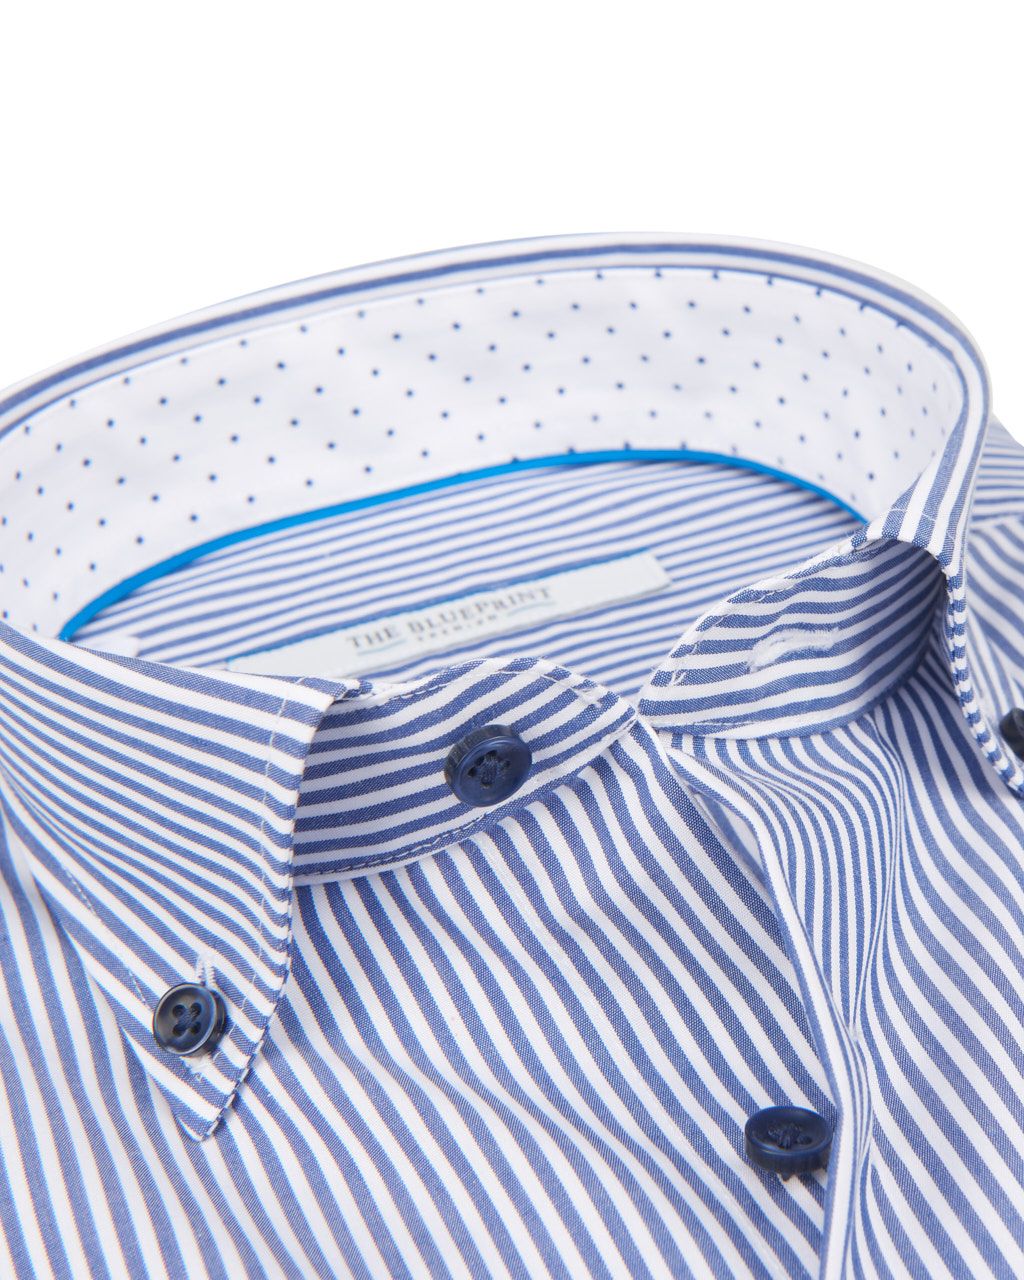 The BLUEPRINT Premium Trendy overhemd LM Blauw streep 061903-001-L